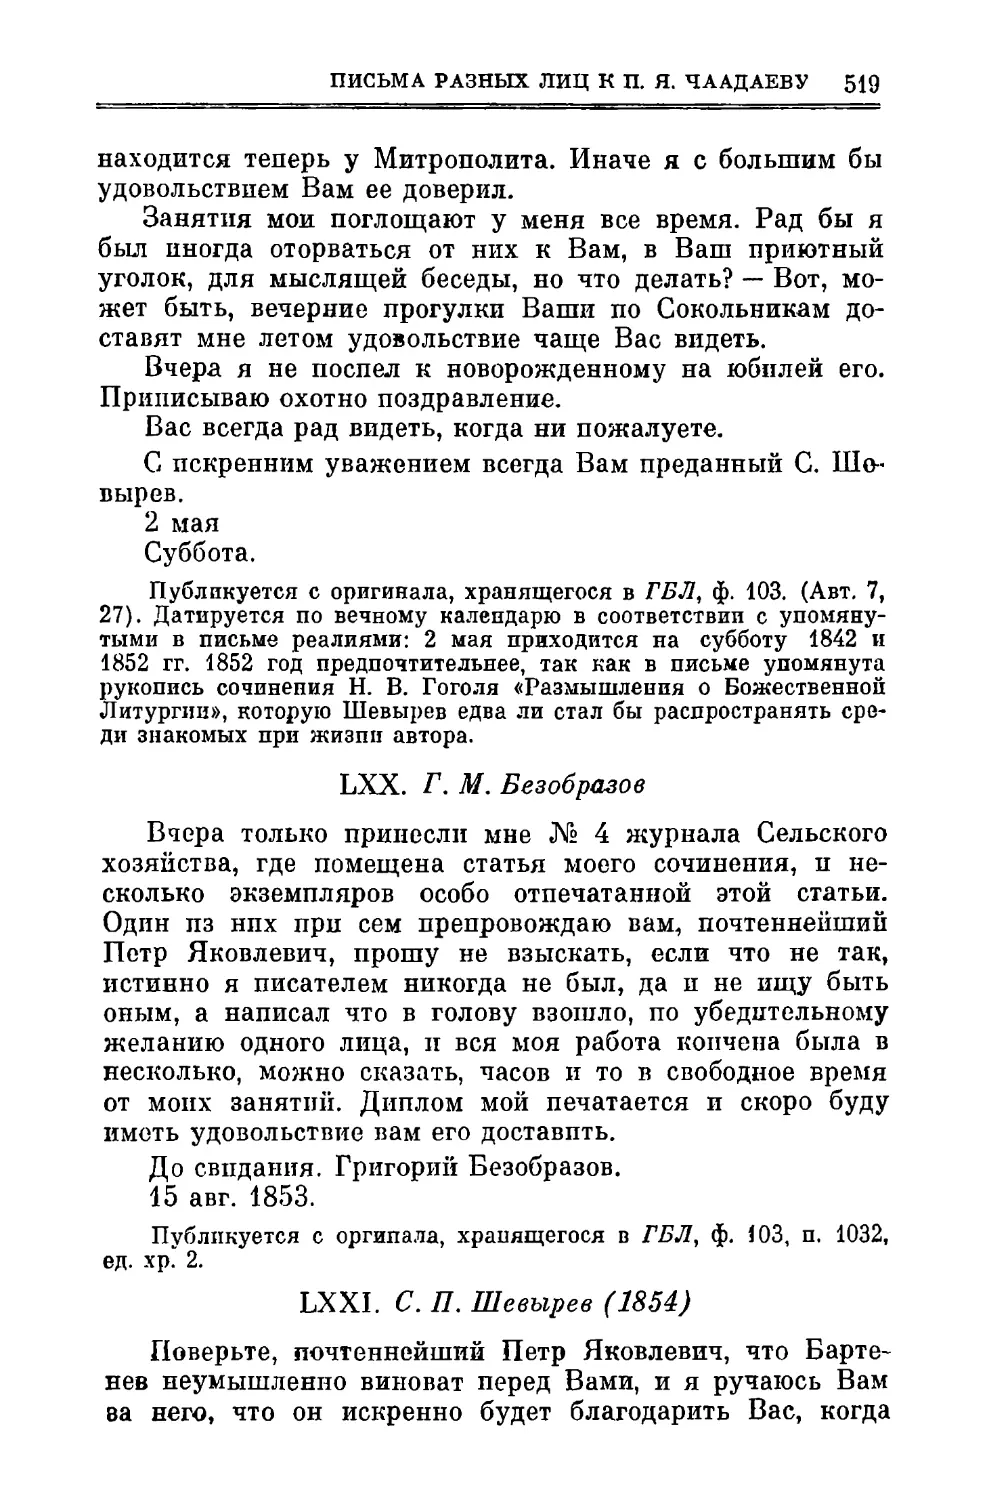 LXX. Безобразов Г.М. 15.VIII.1853
LXXI. Шевырев С.П. 17.X.1854